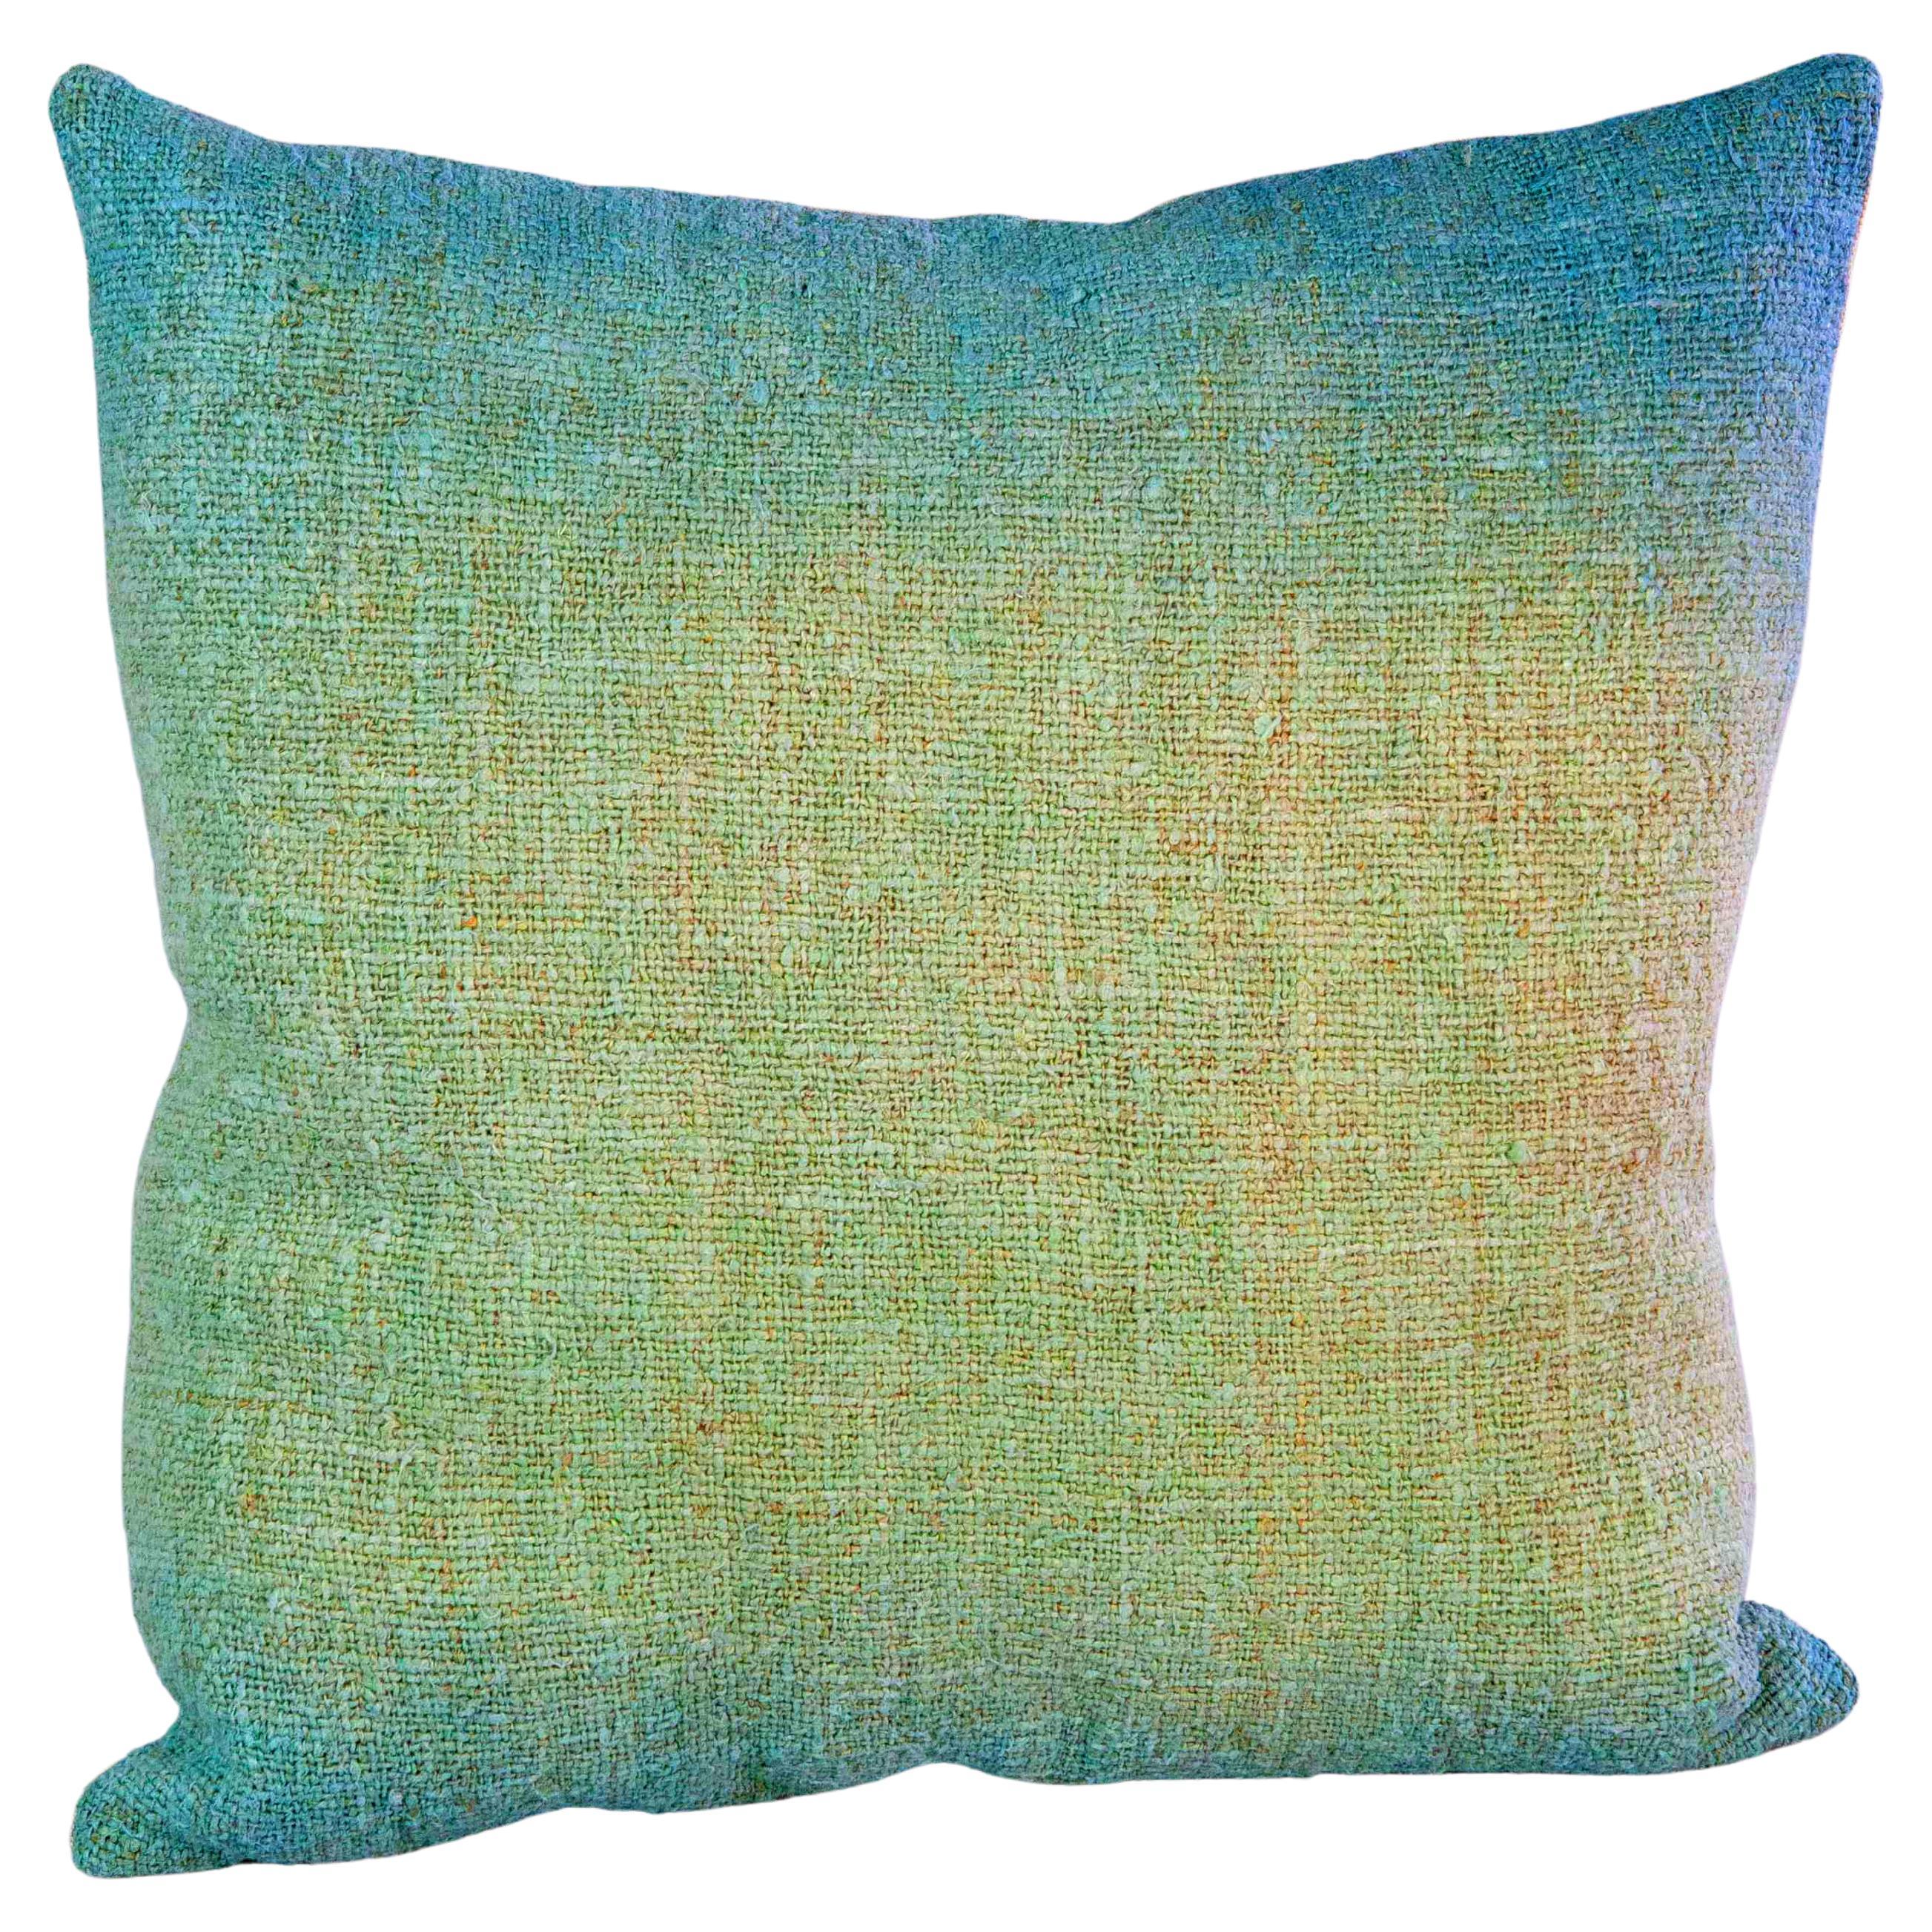 Hand Painted Vintage Linen & Hemp Square Pillow in Bright Aqua Tones, in Stock